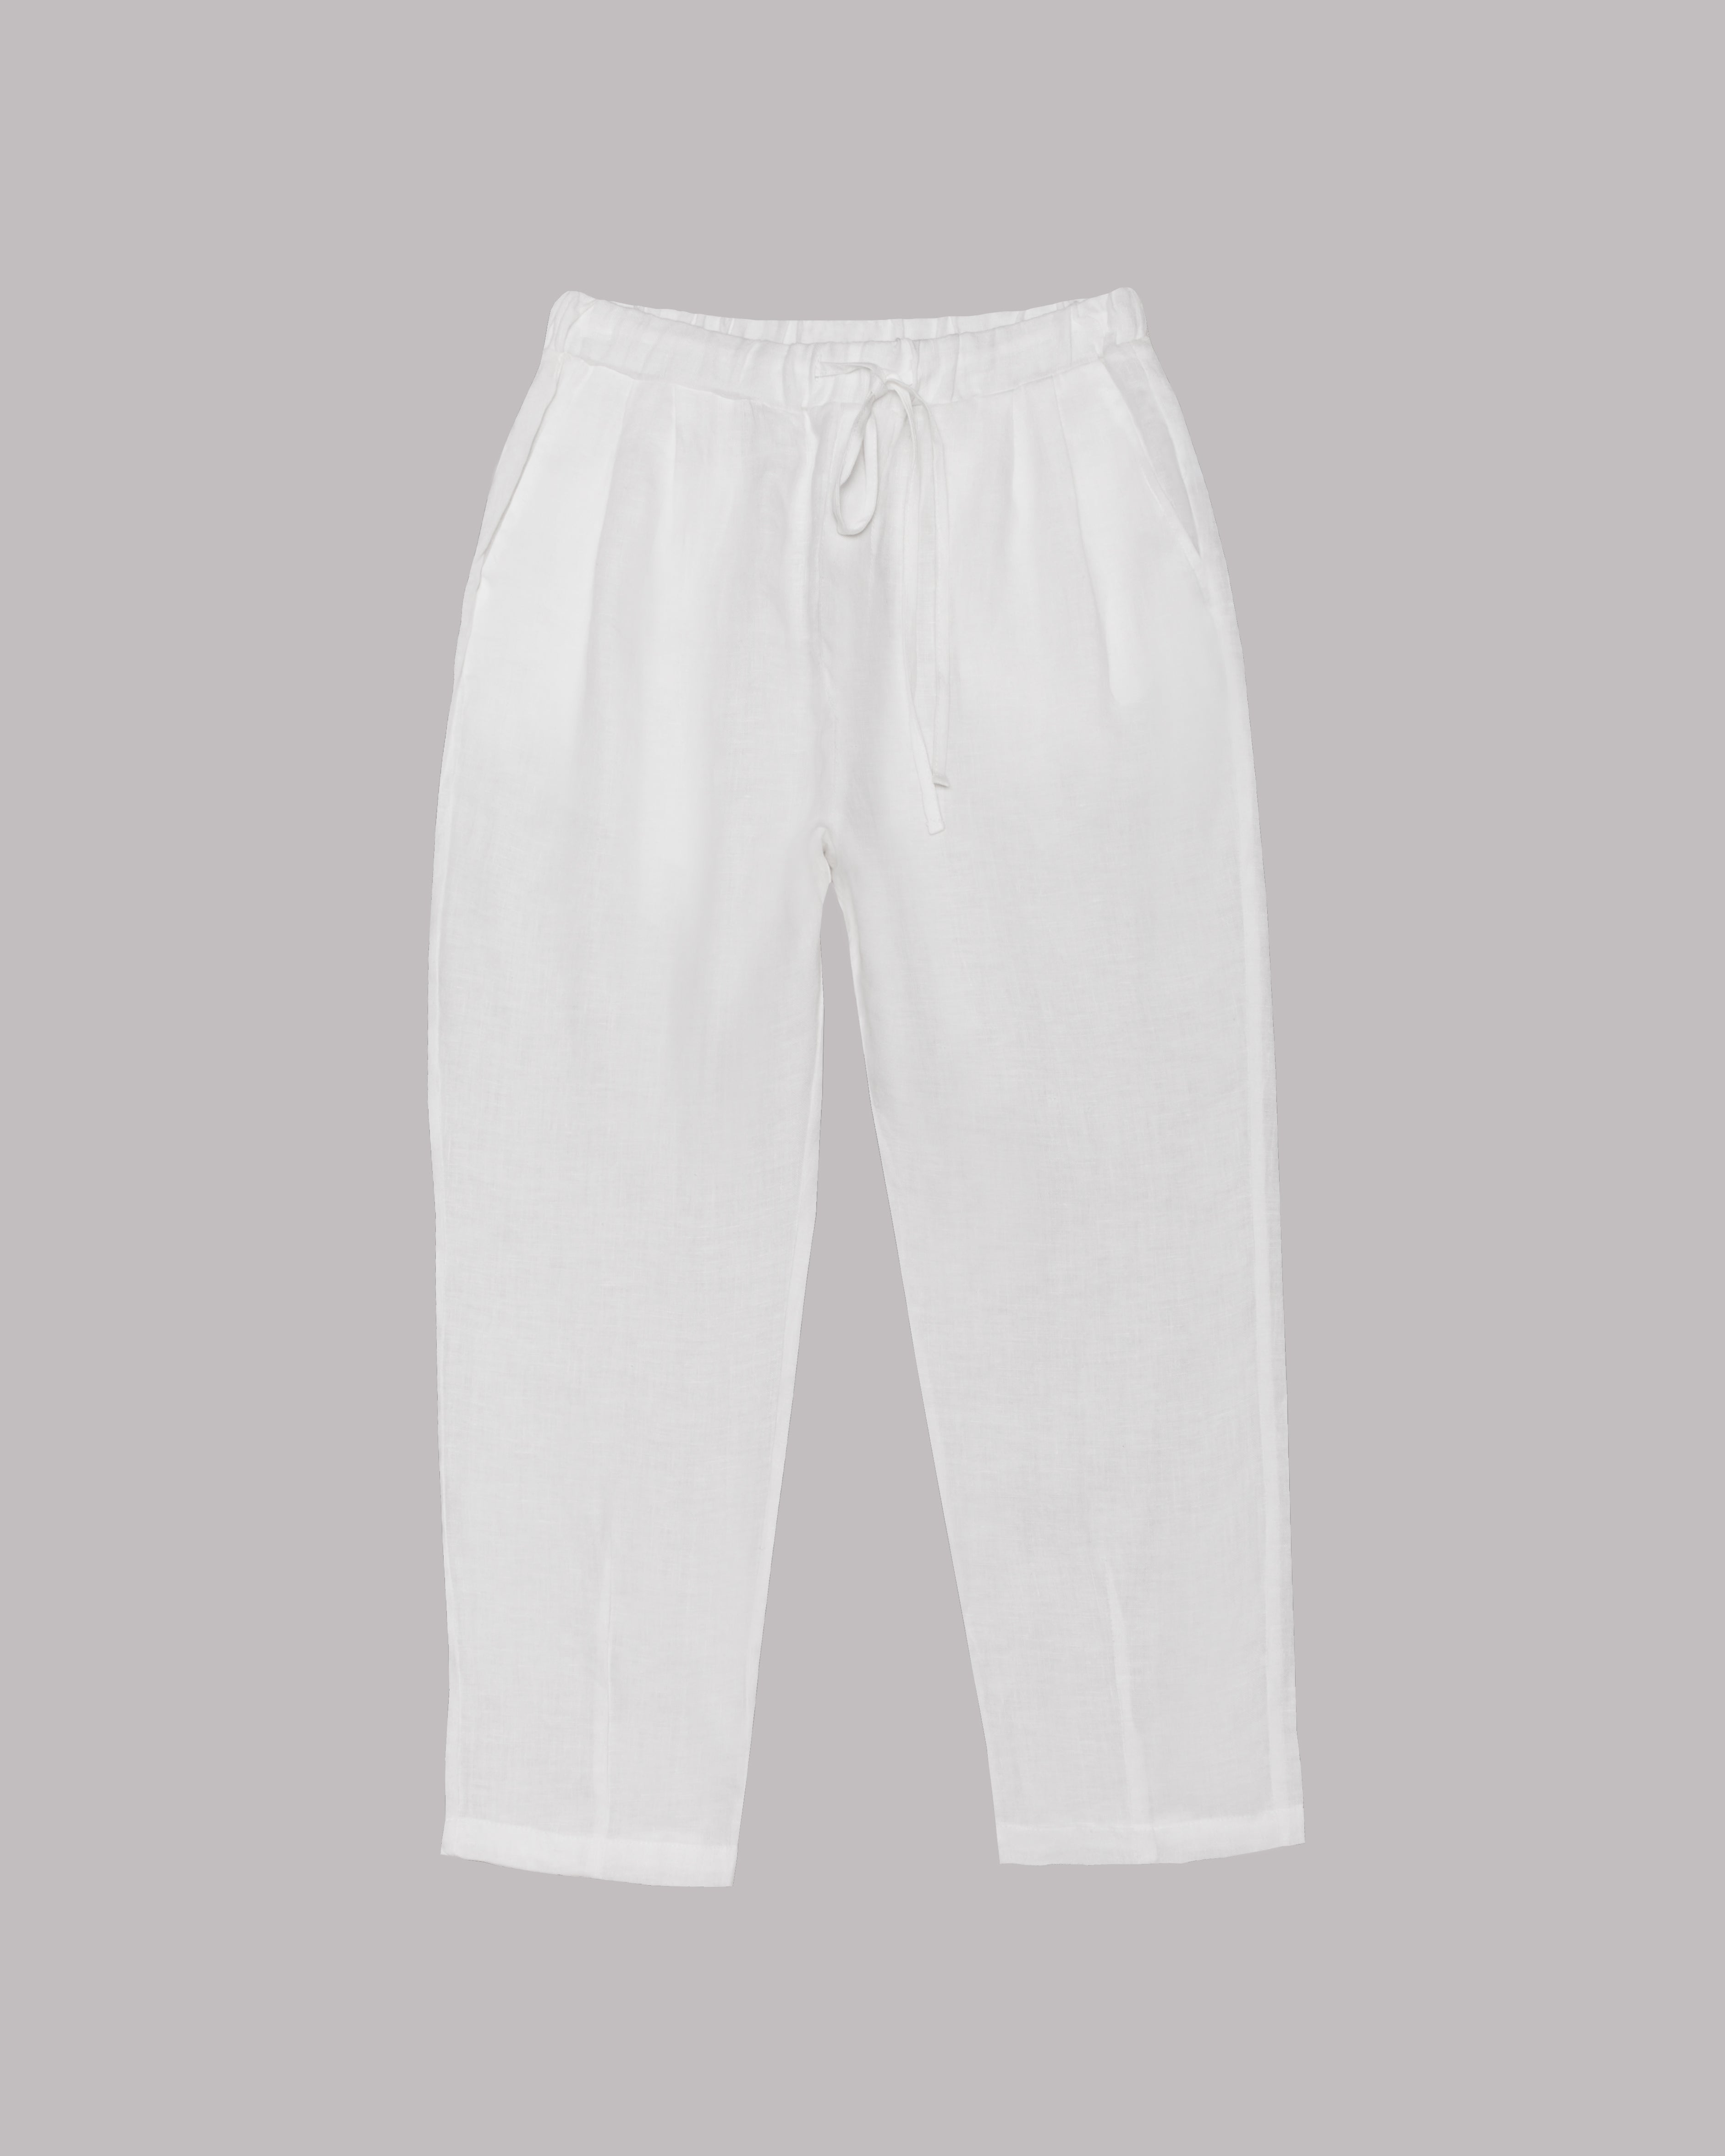 The White Linen Pants